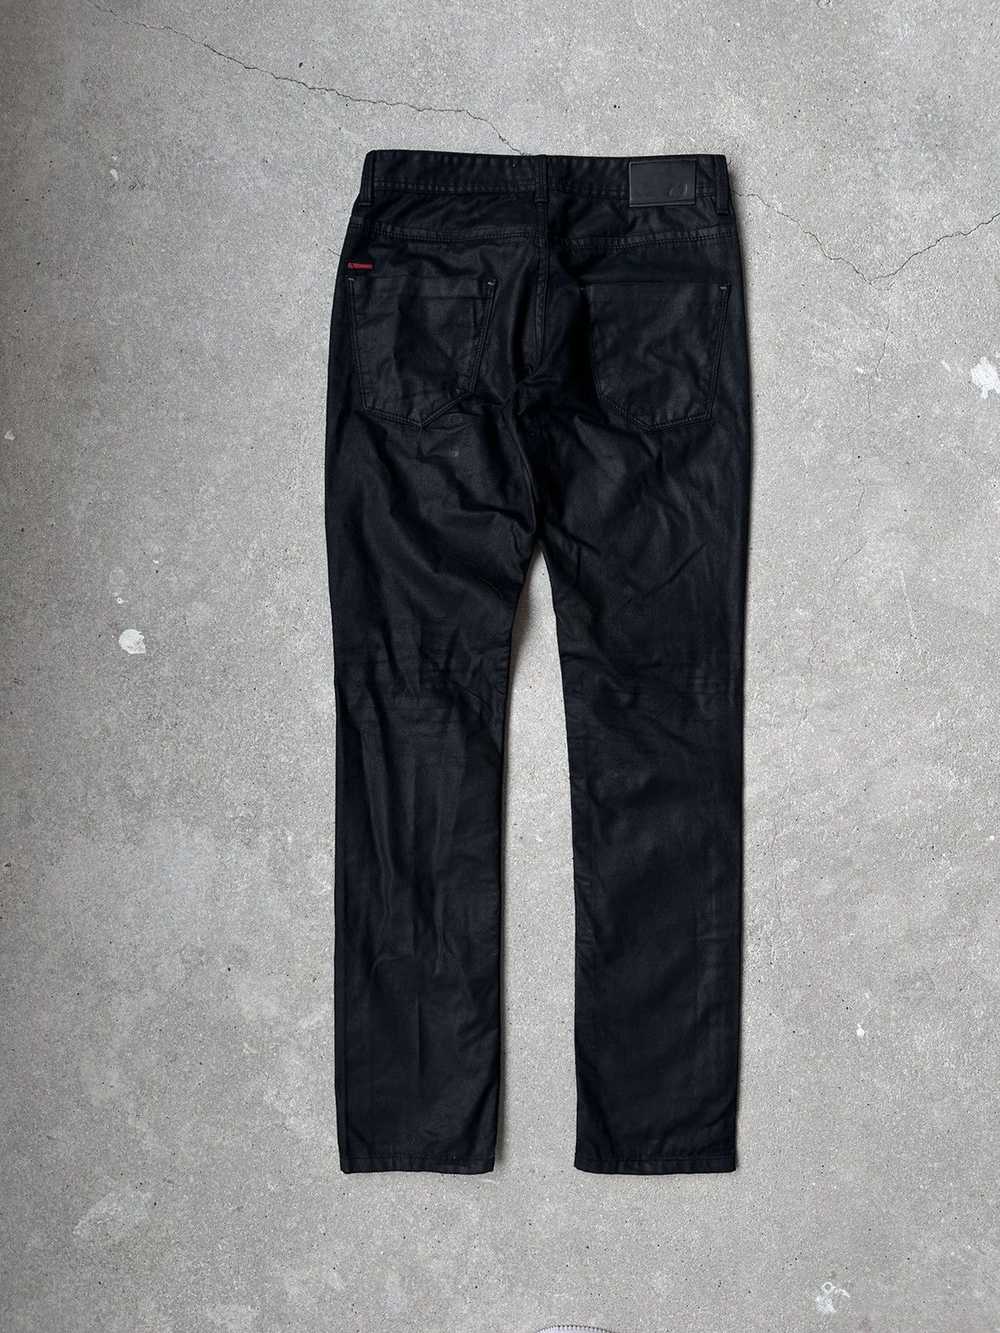 Japanese Brand Japanese Brand Skinny Waxed Jeans - image 7